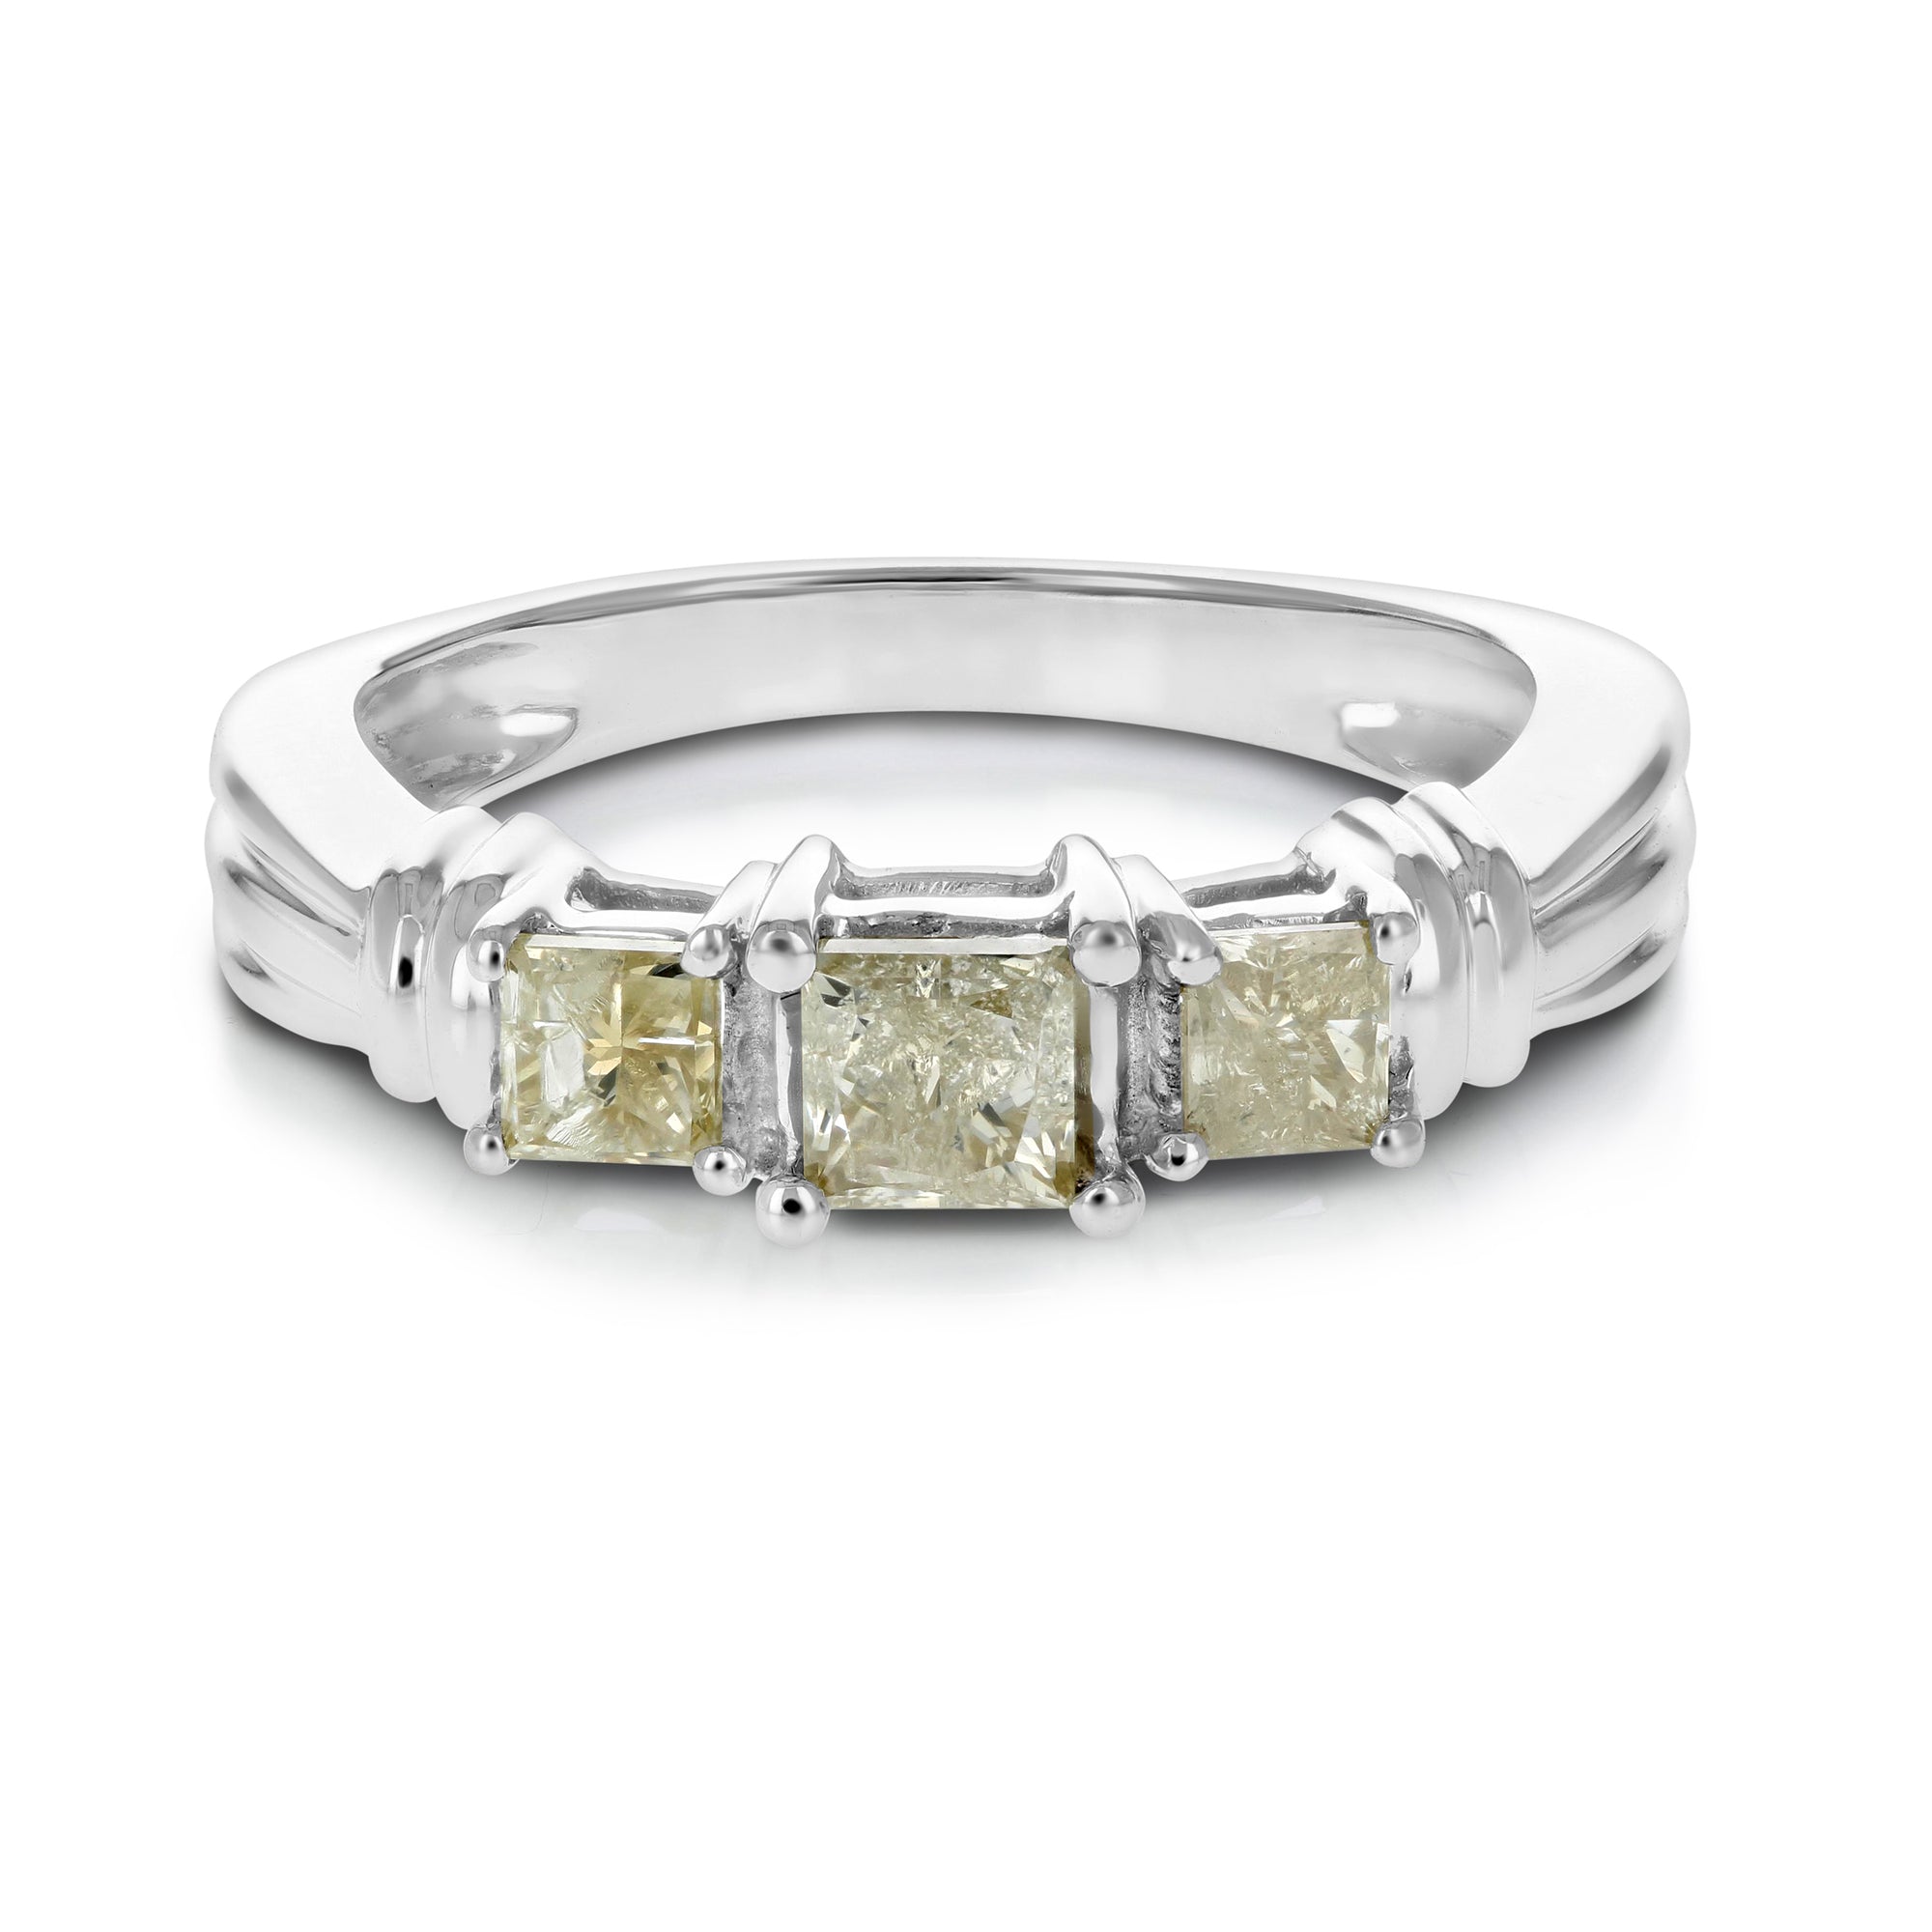 1 cttw Princess Cut Diamond 3 Stone Engagement Ring 14K White Gold Size 7